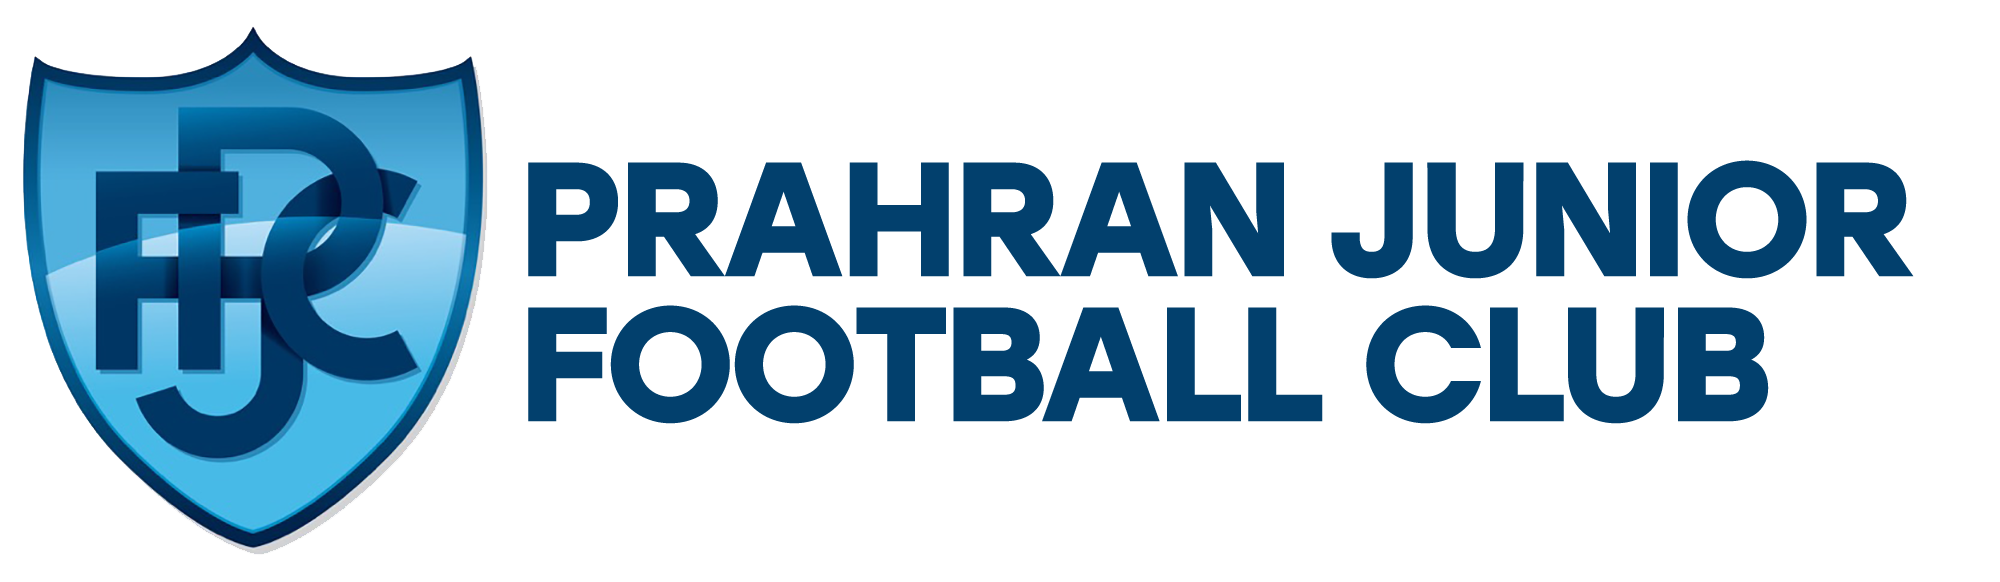 Prahran Junior Football Club